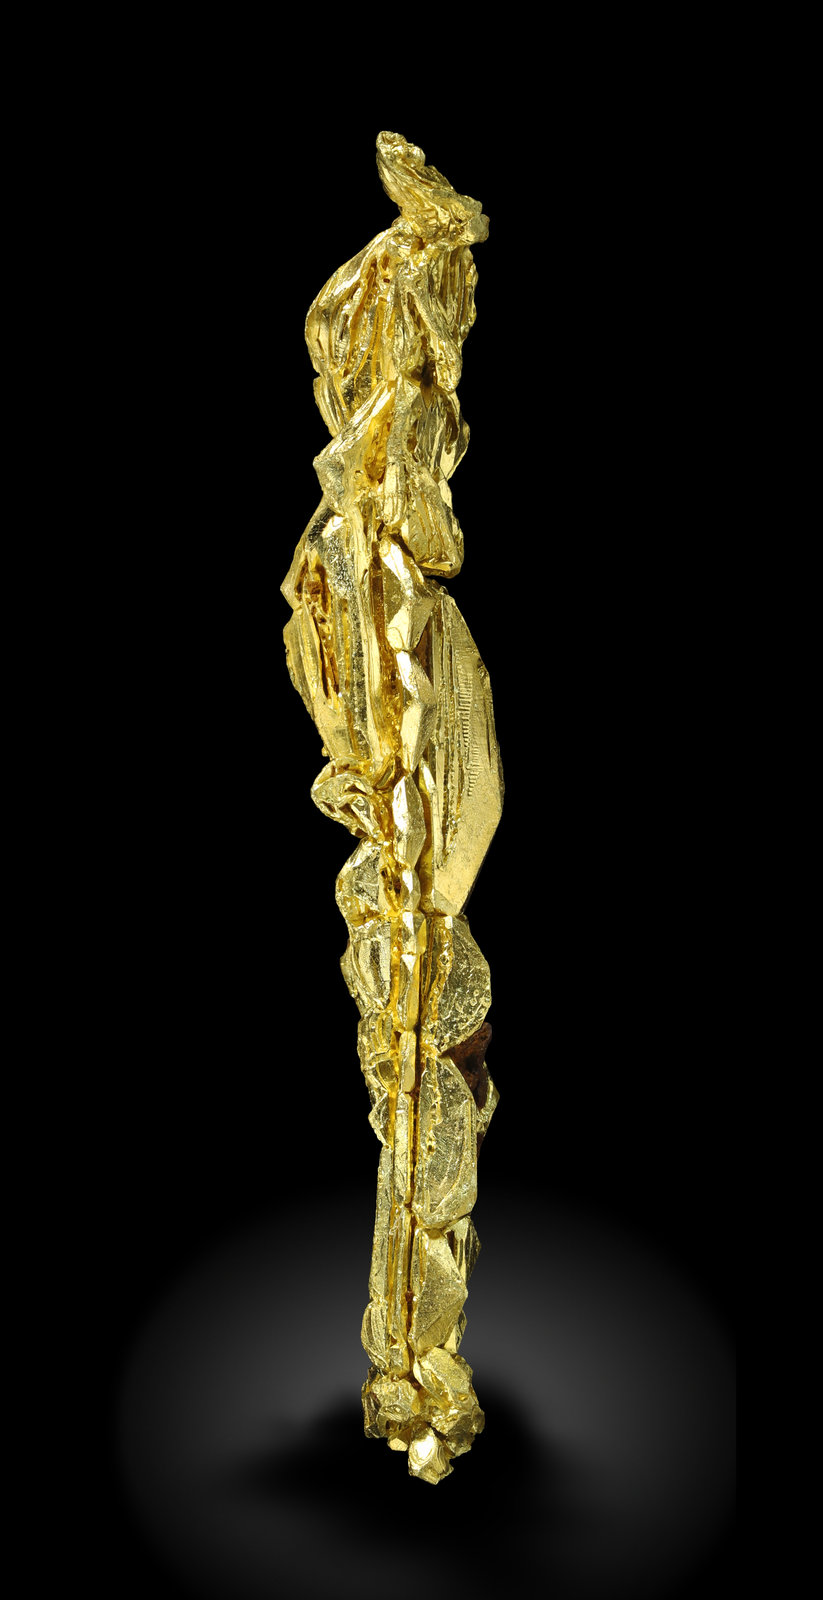 specimens/s_imagesAM5/Gold-MK36AM5_0678_r.jpg